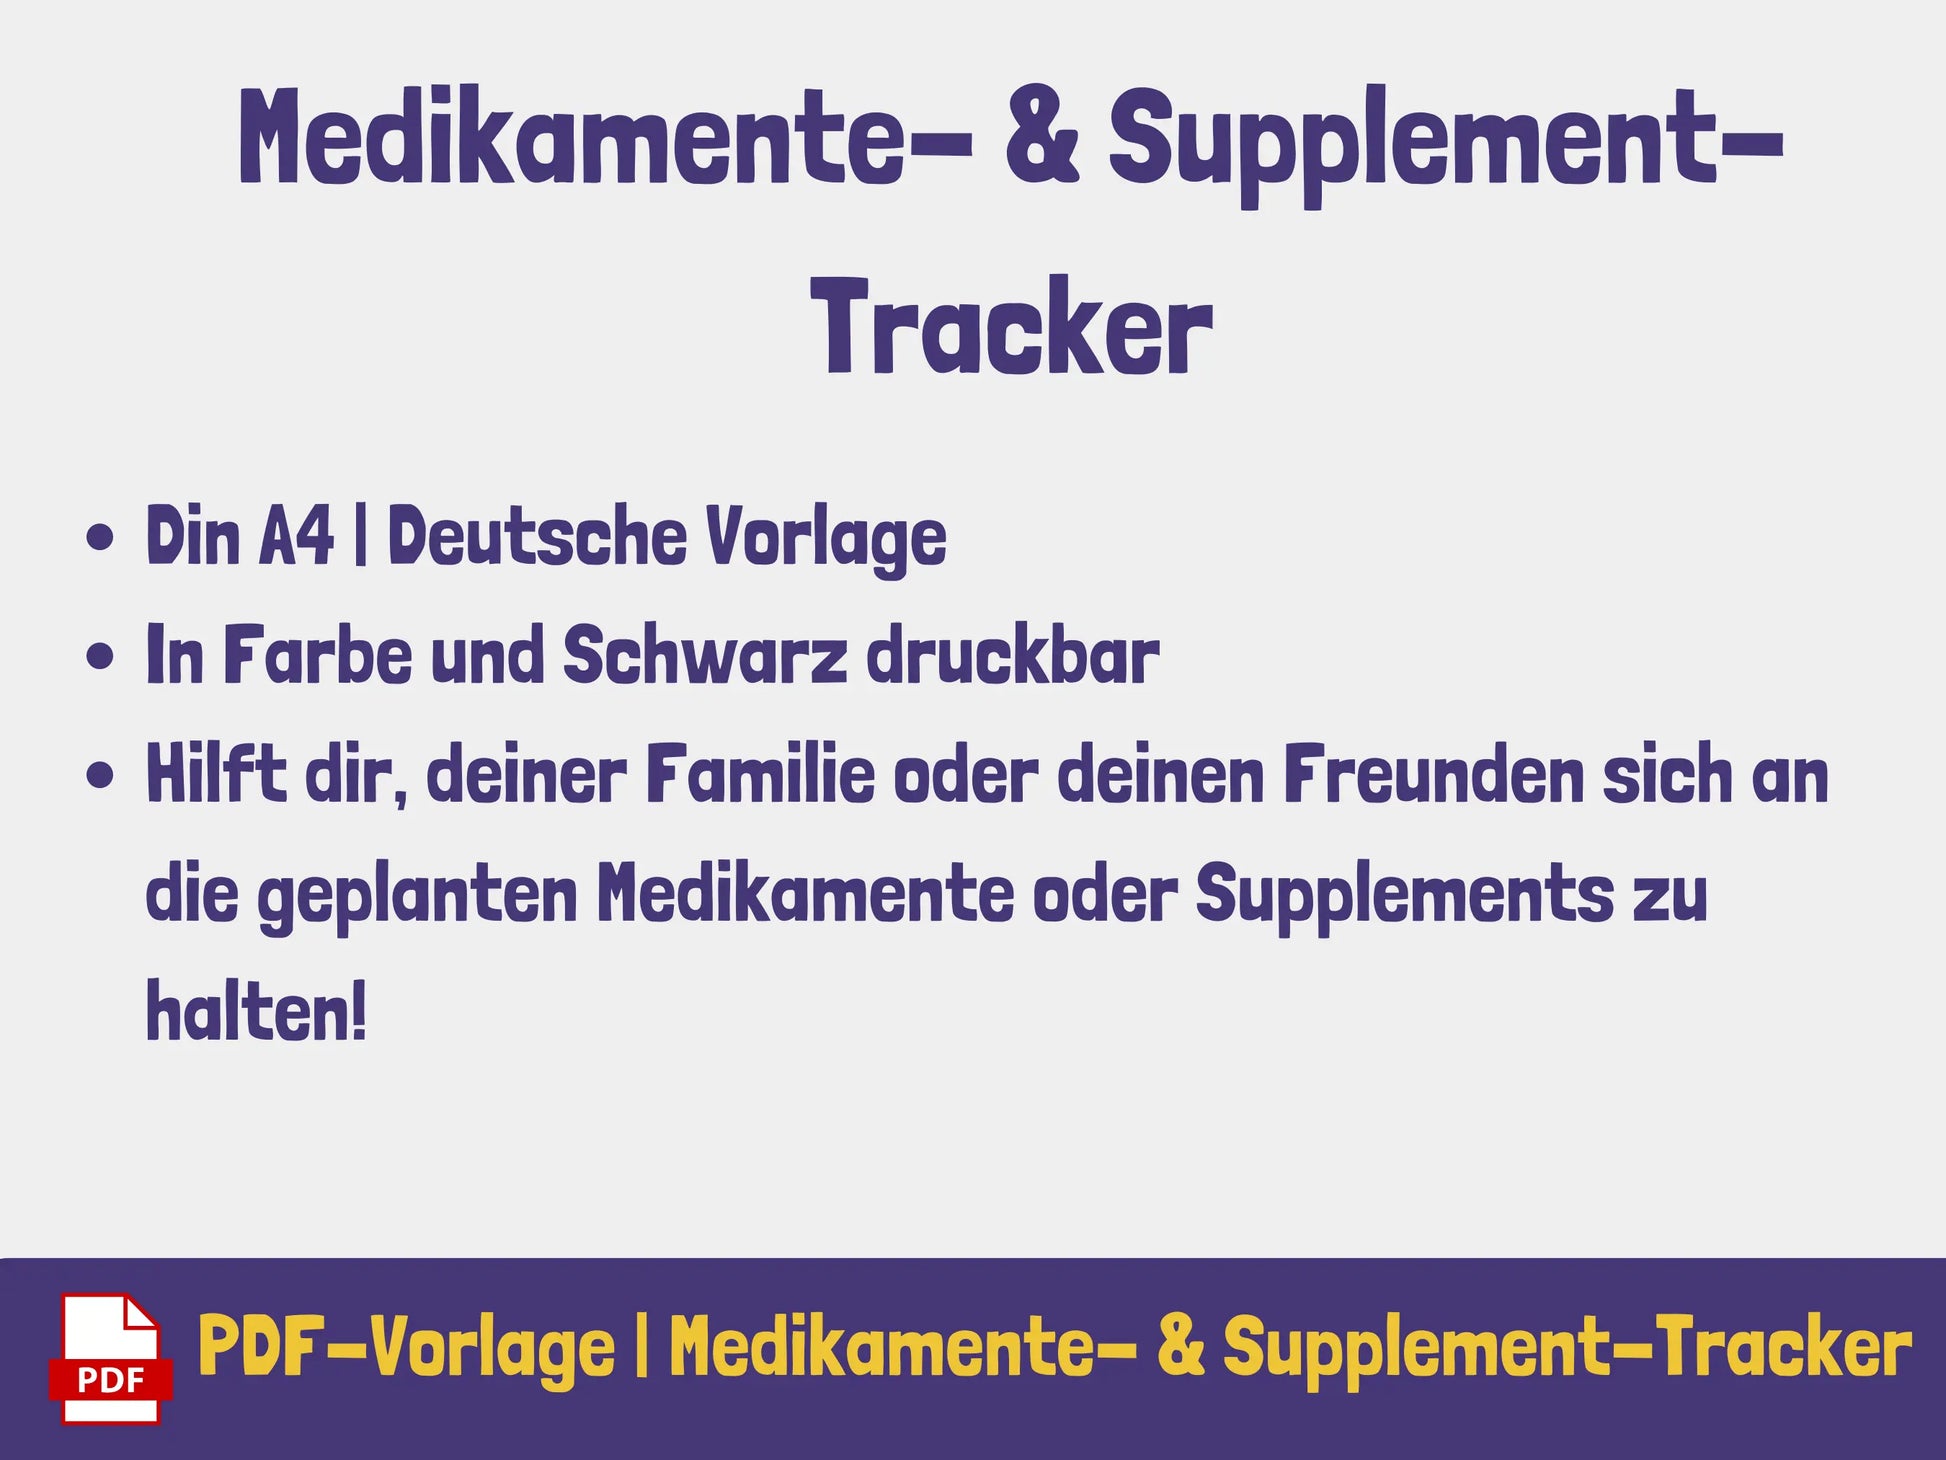 Medikamente und Supplement-Tracker AndreasJansen